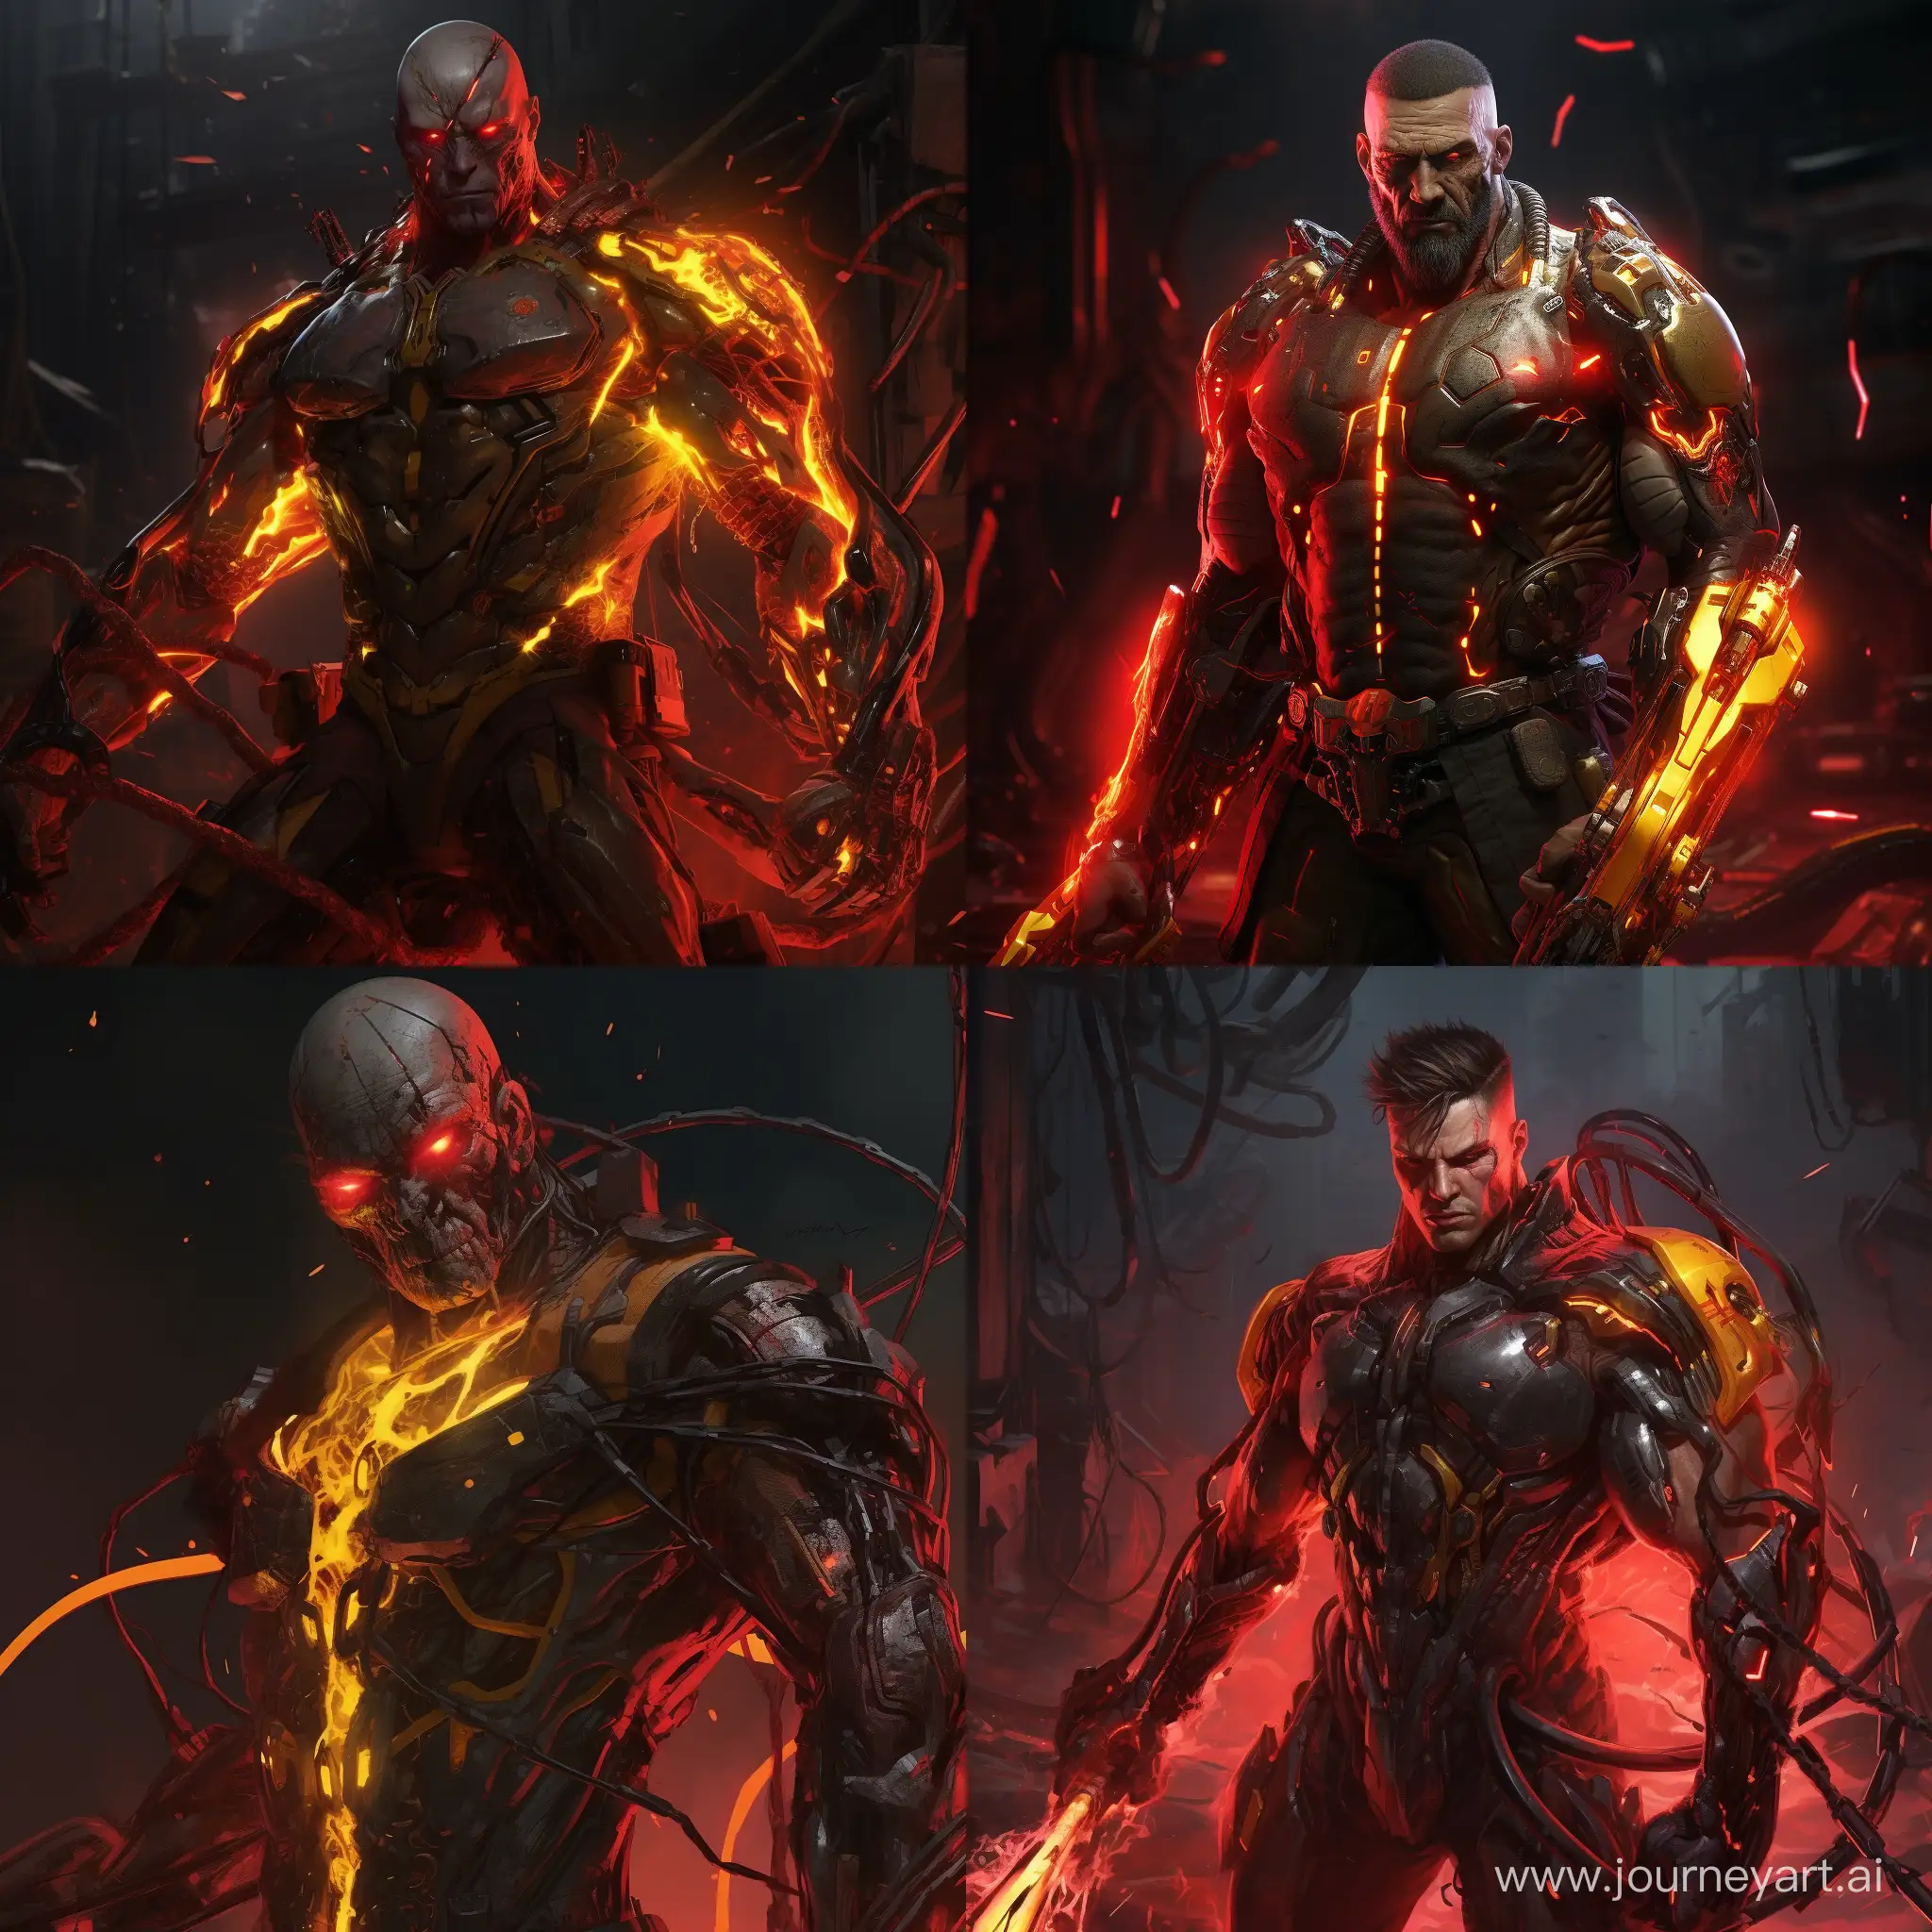 Cyberpunk-Warrior-with-Fiery-Hammer-in-RedYellow-Cybernetic-Suit